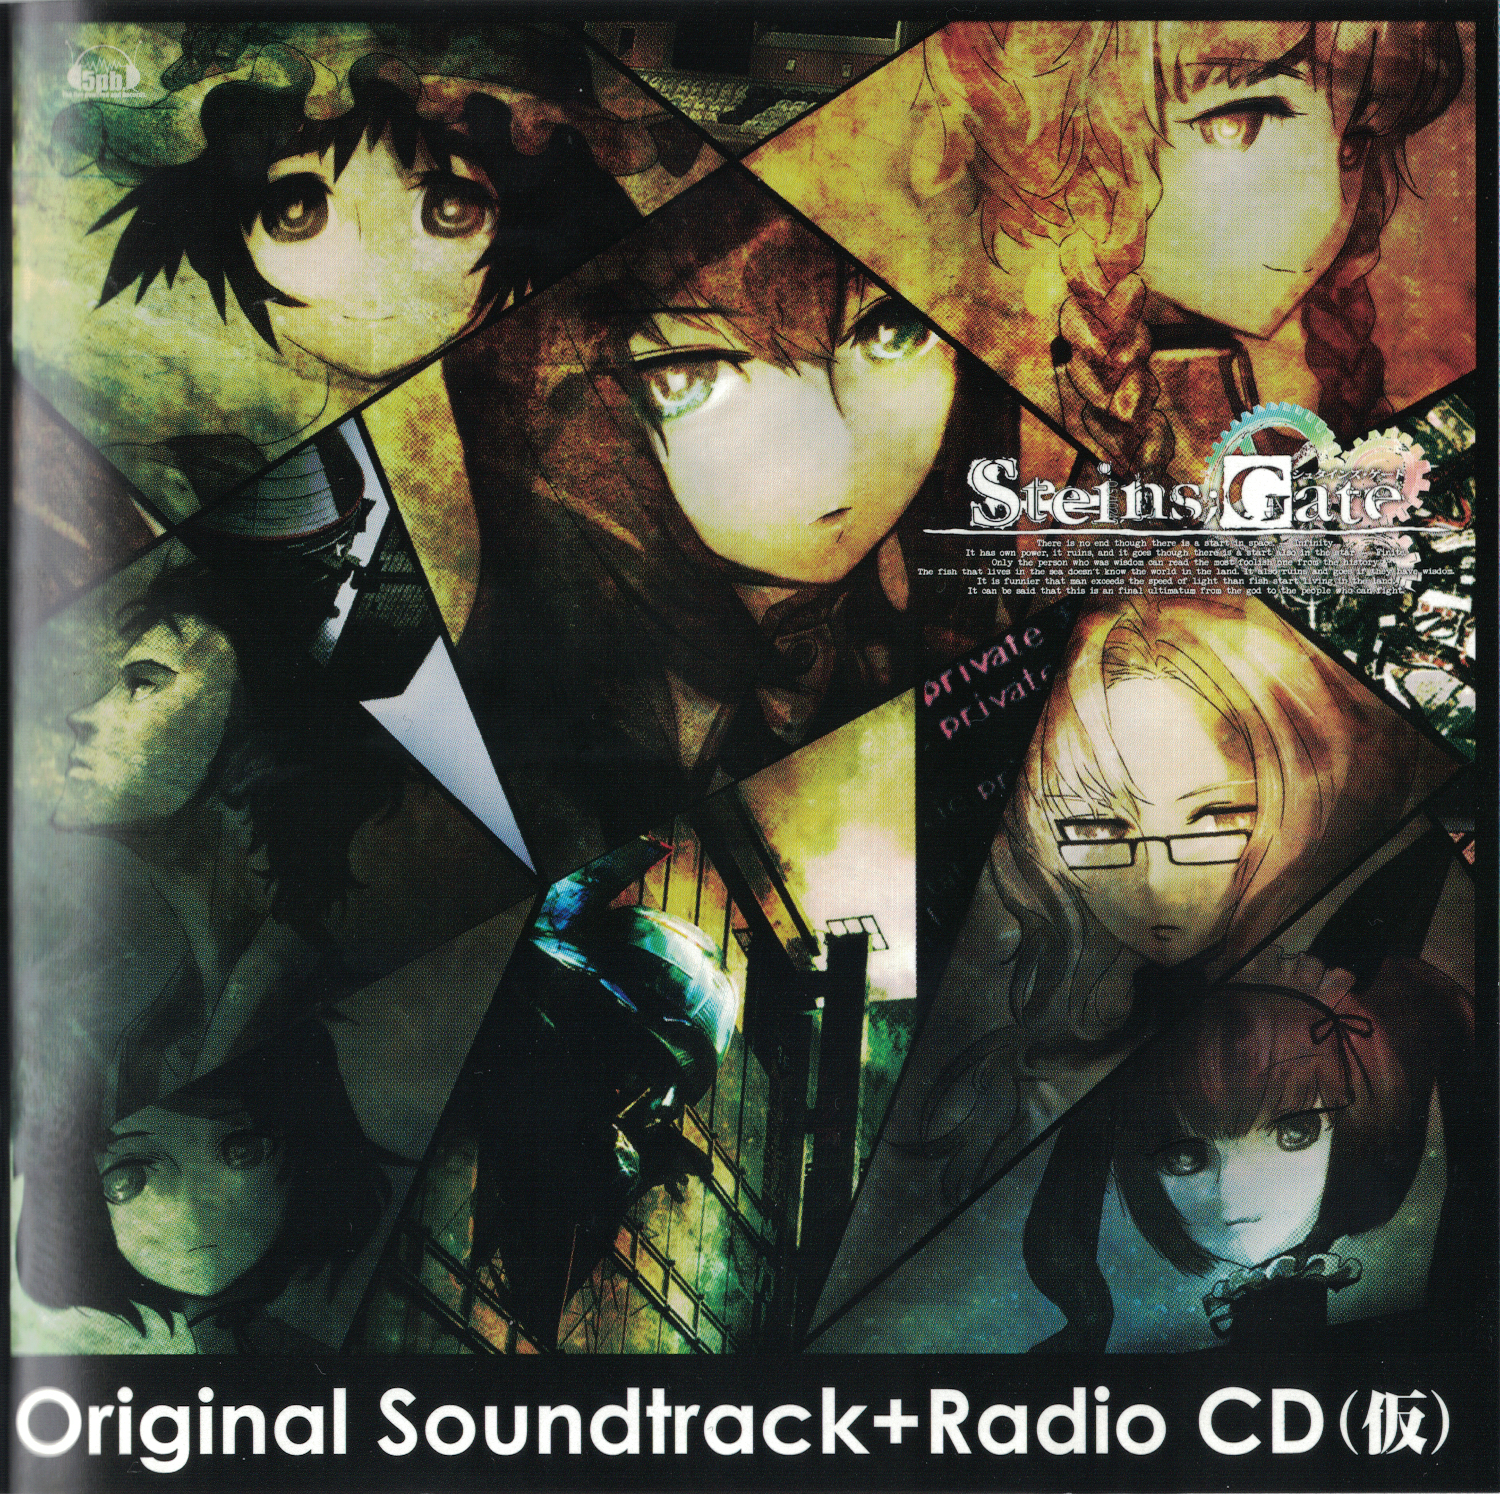 Steins;Gate Original Soundtrack + Radio CD (Kari) (Anime) (2010) MP3 -  Download Steins;Gate Original Soundtrack + Radio CD (Kari) (Anime) (2010)  Soundtracks for FREE!